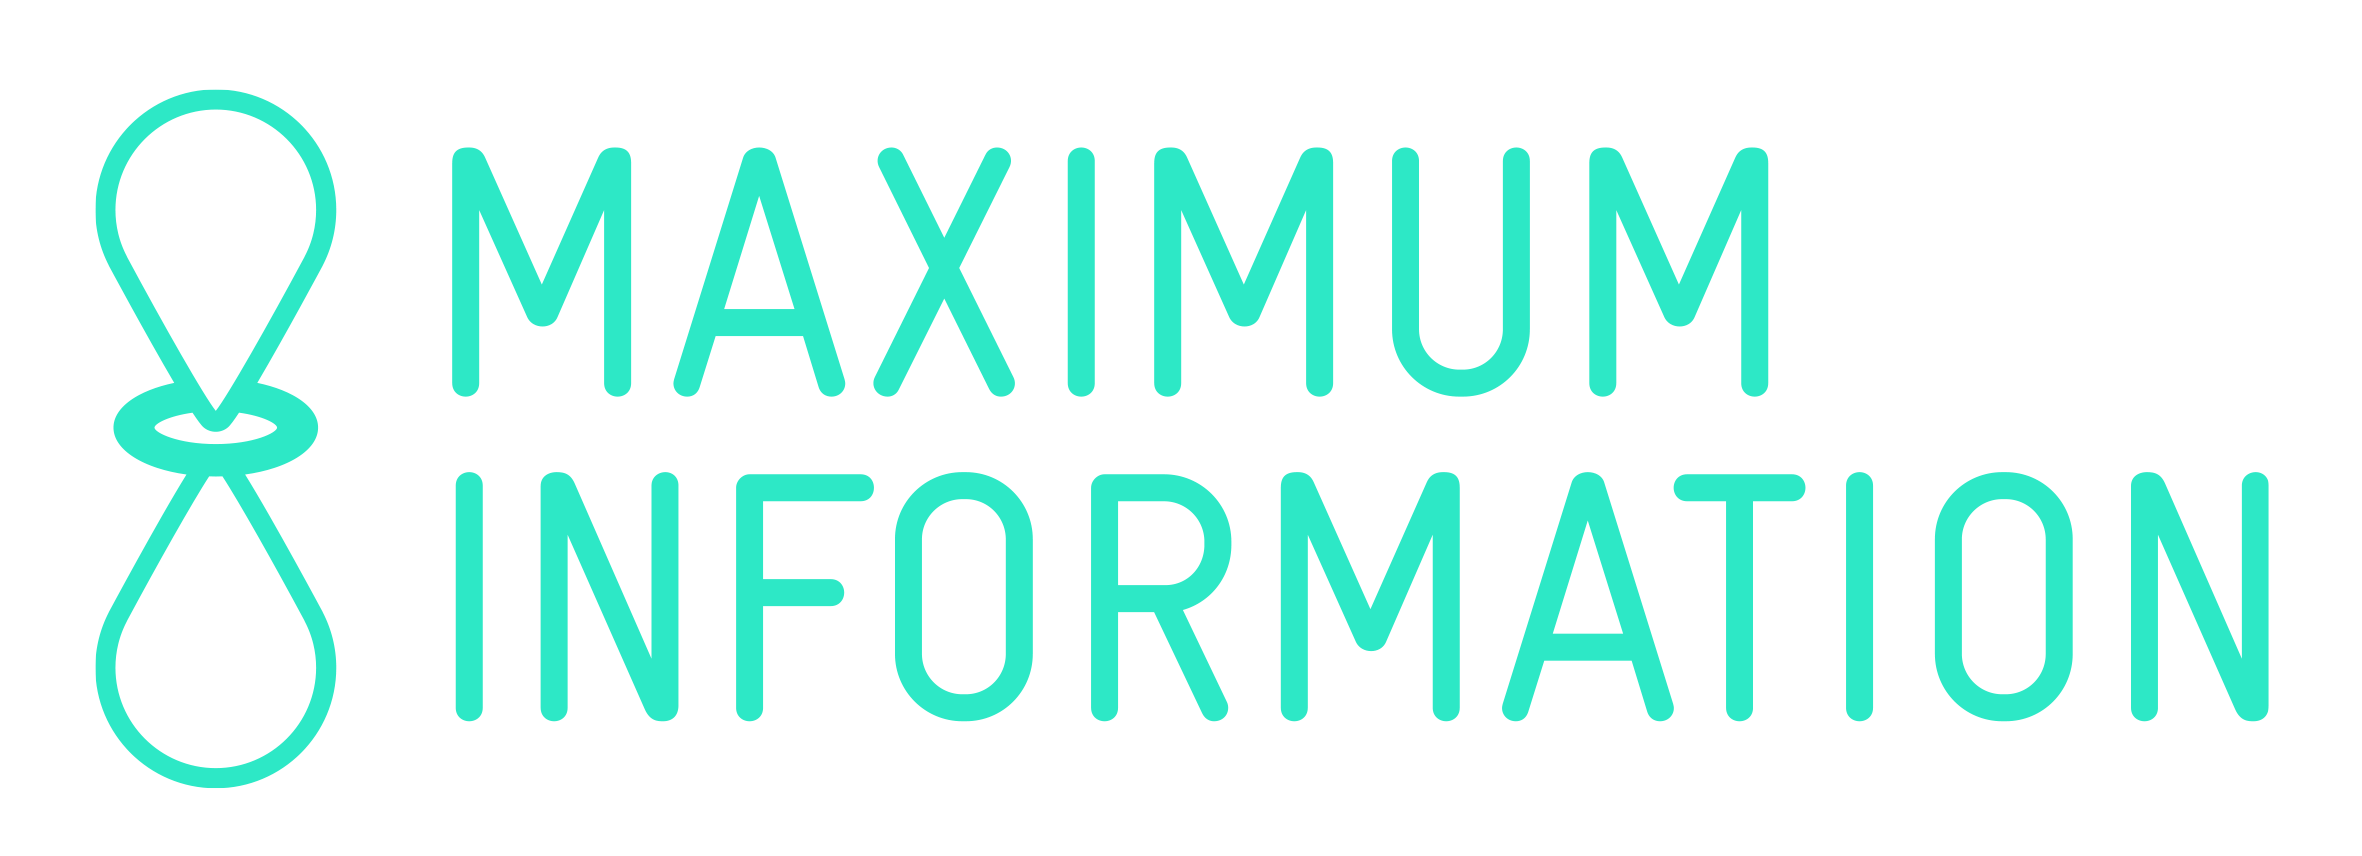 Maximum Information logo.